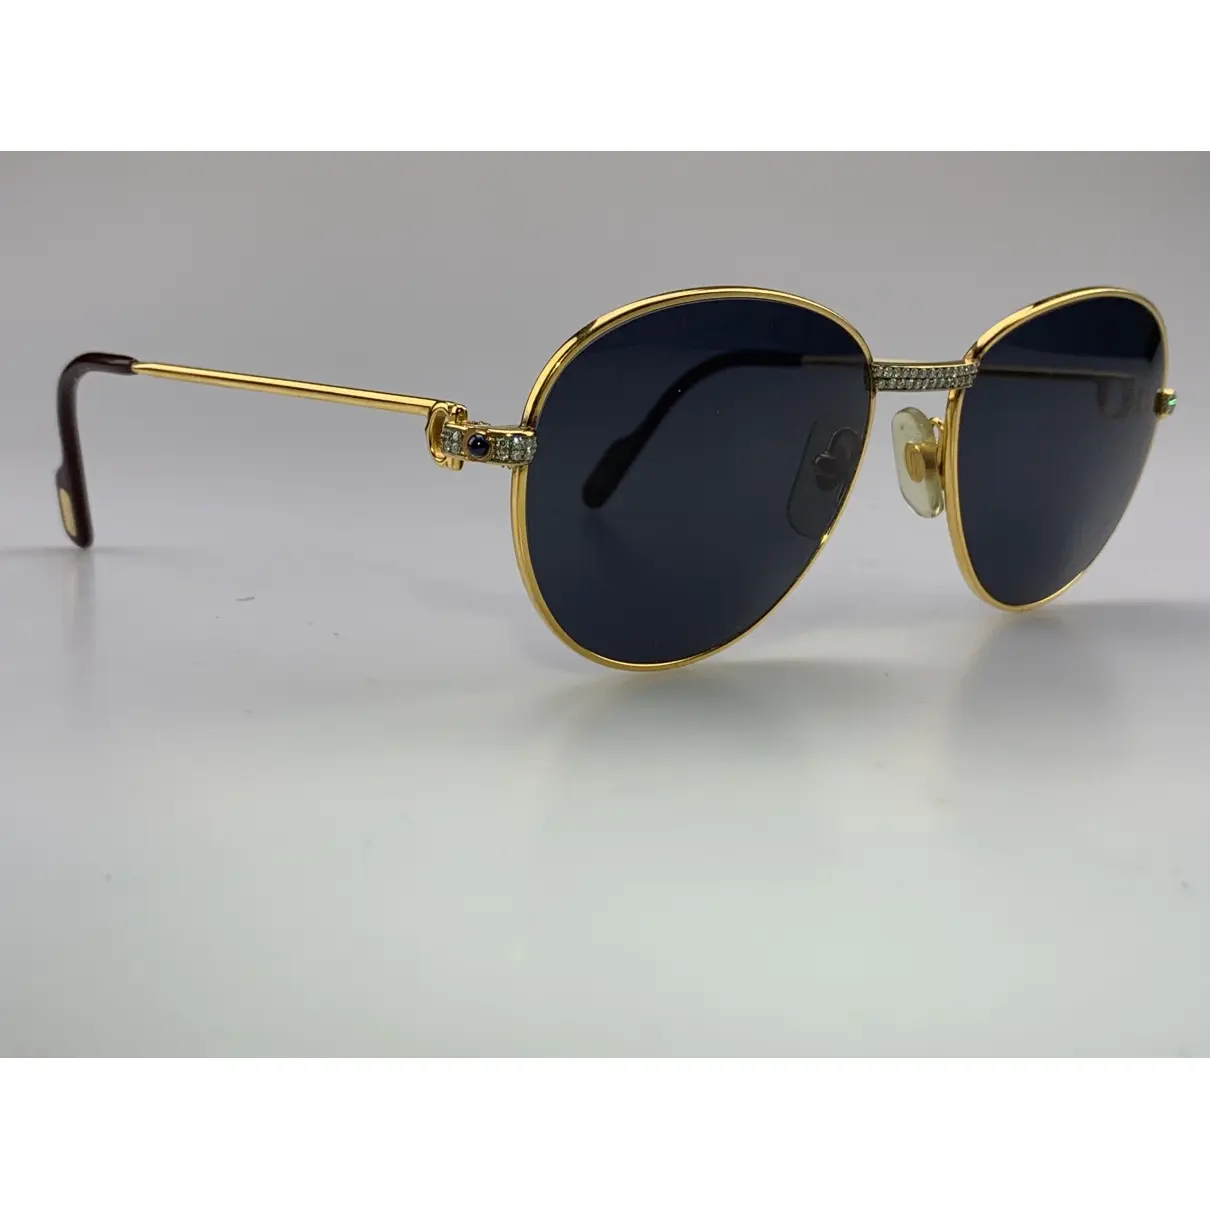 Cartier Aviator sunglasses for sale - Vintage